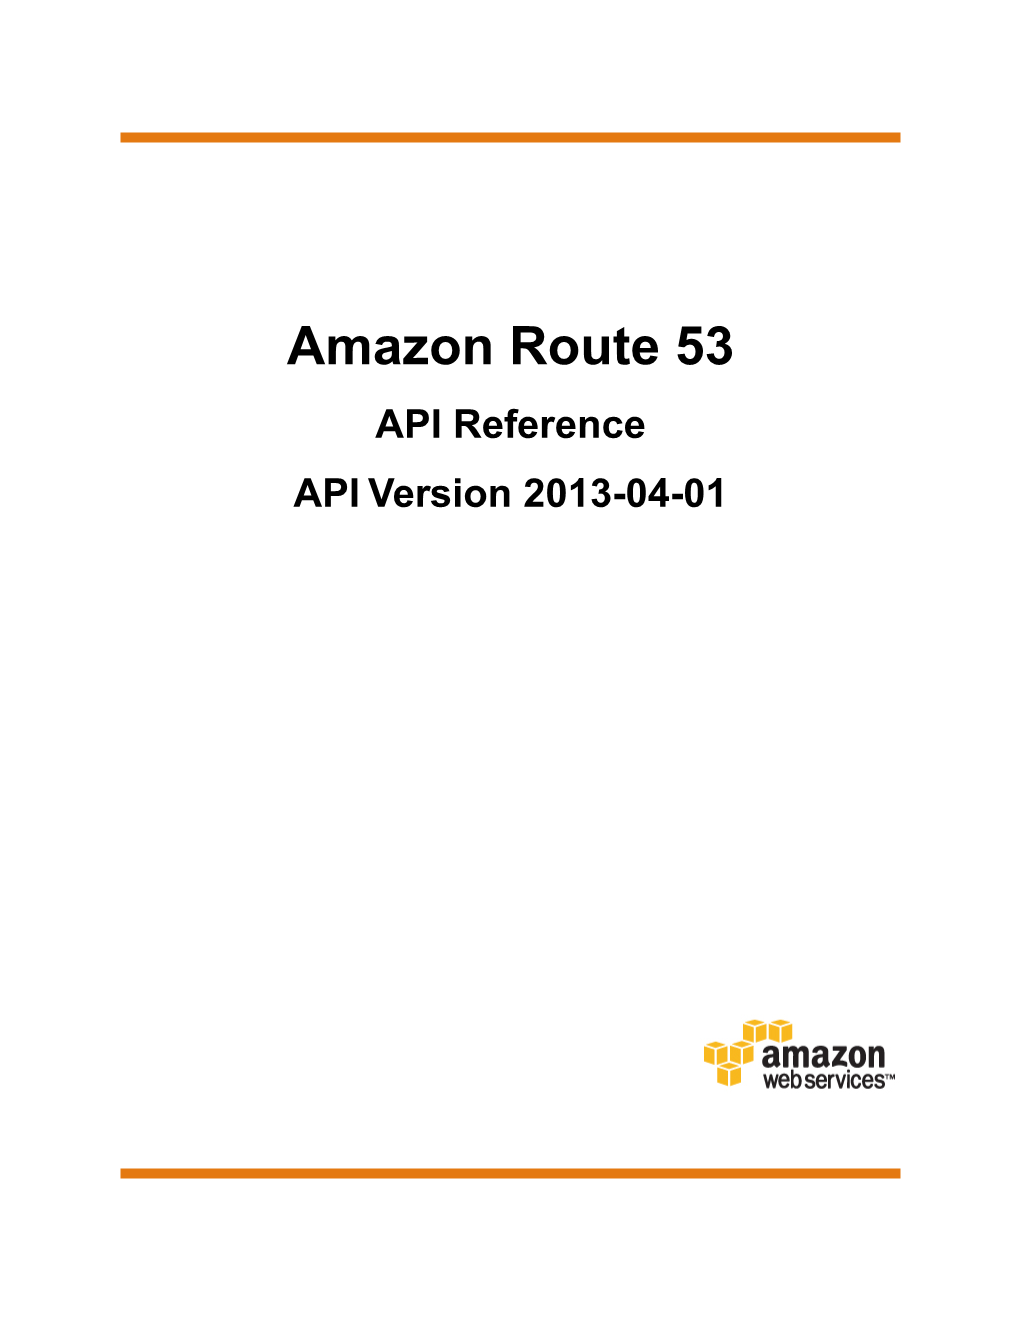 Amazon Route 53 API Reference API Version 2013-04-01 Amazon Route 53 API Reference